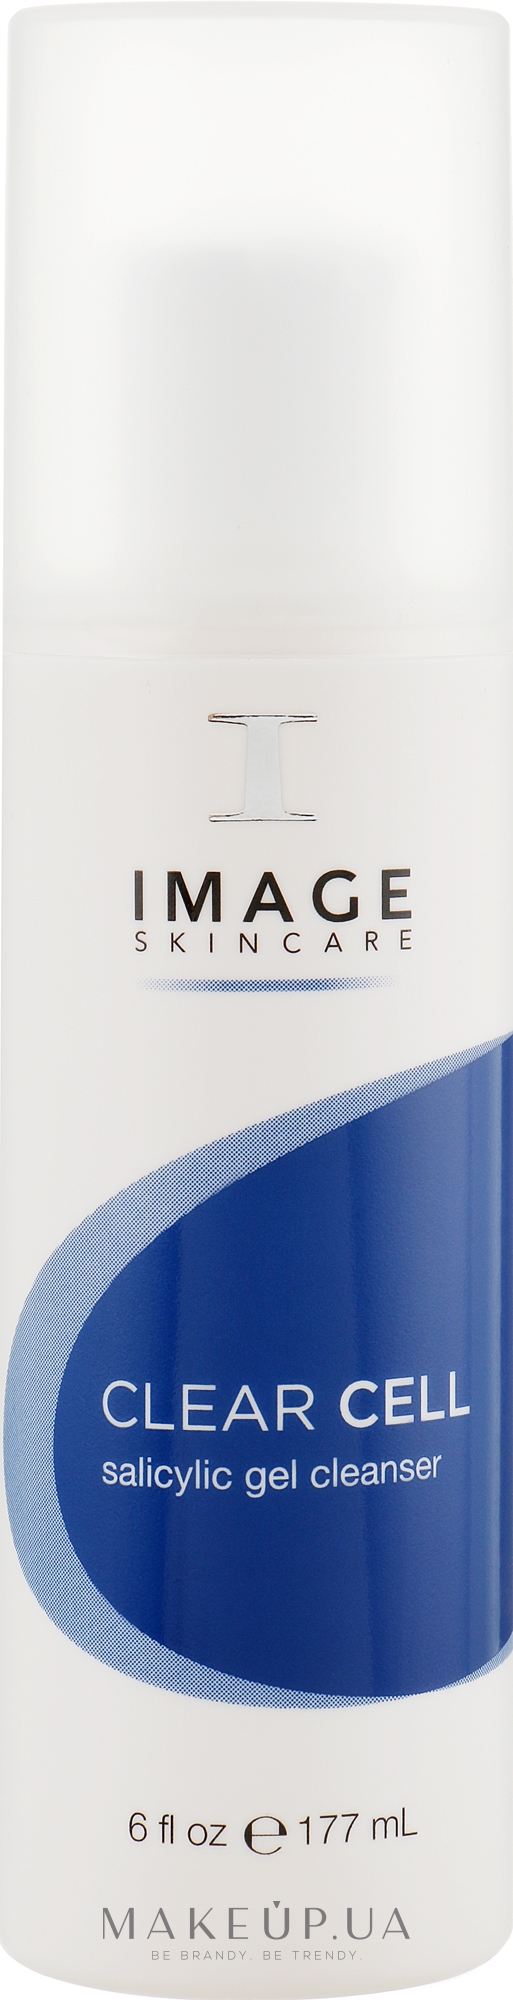 Очищающий салициловый гель для проблемной кожи - Image Skincare Clear Cell Salicylic Gel Cleanser — фото 177ml